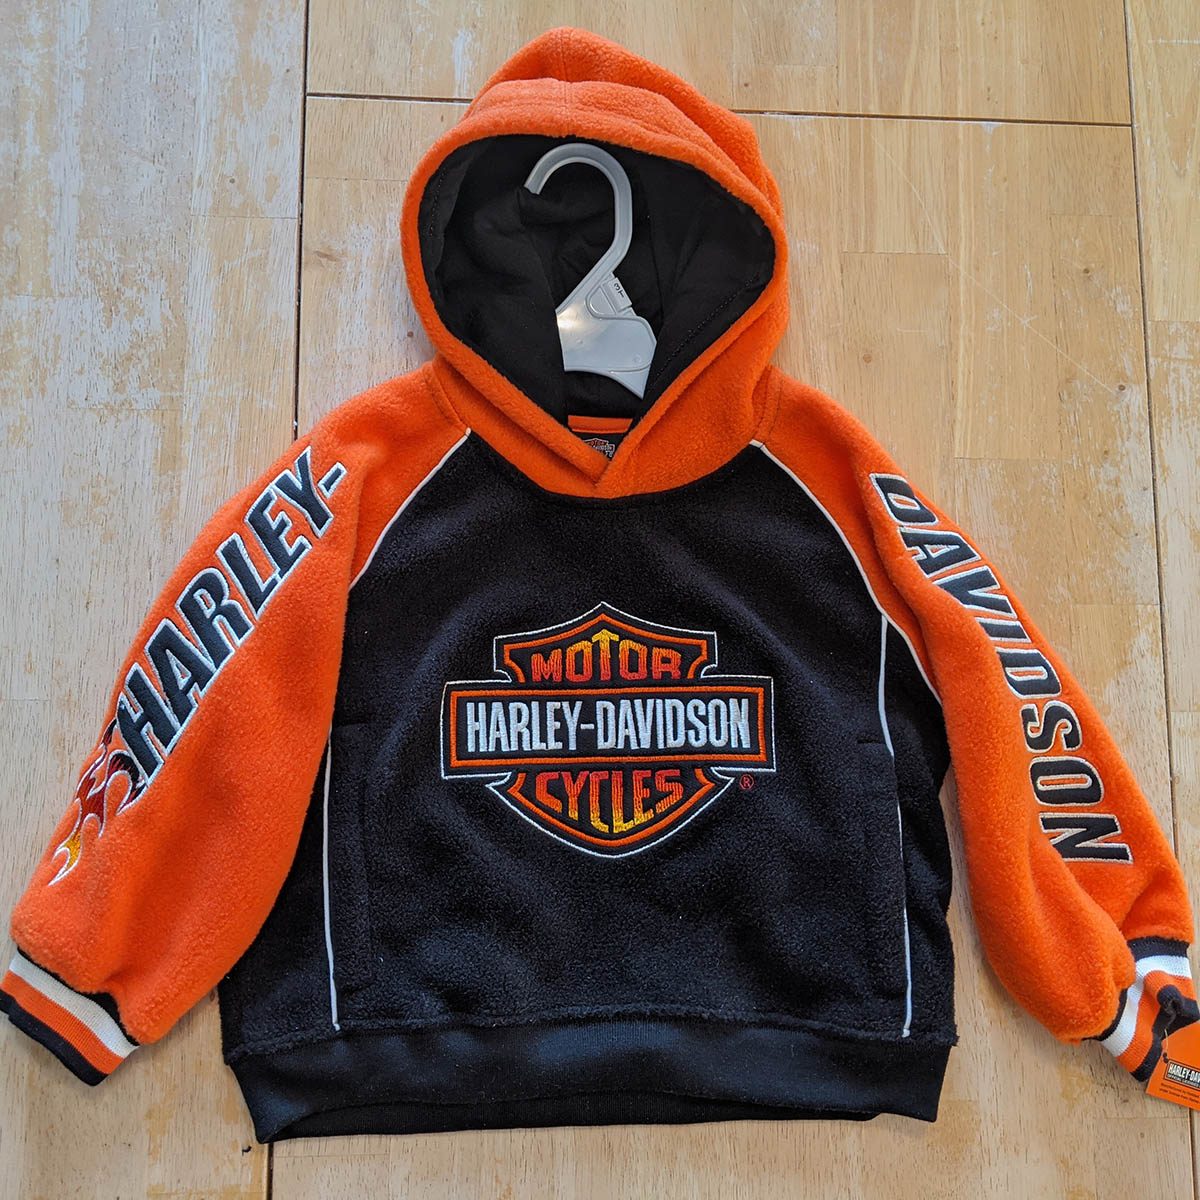 Boys Harley Davidson Jacket Promotion Off60